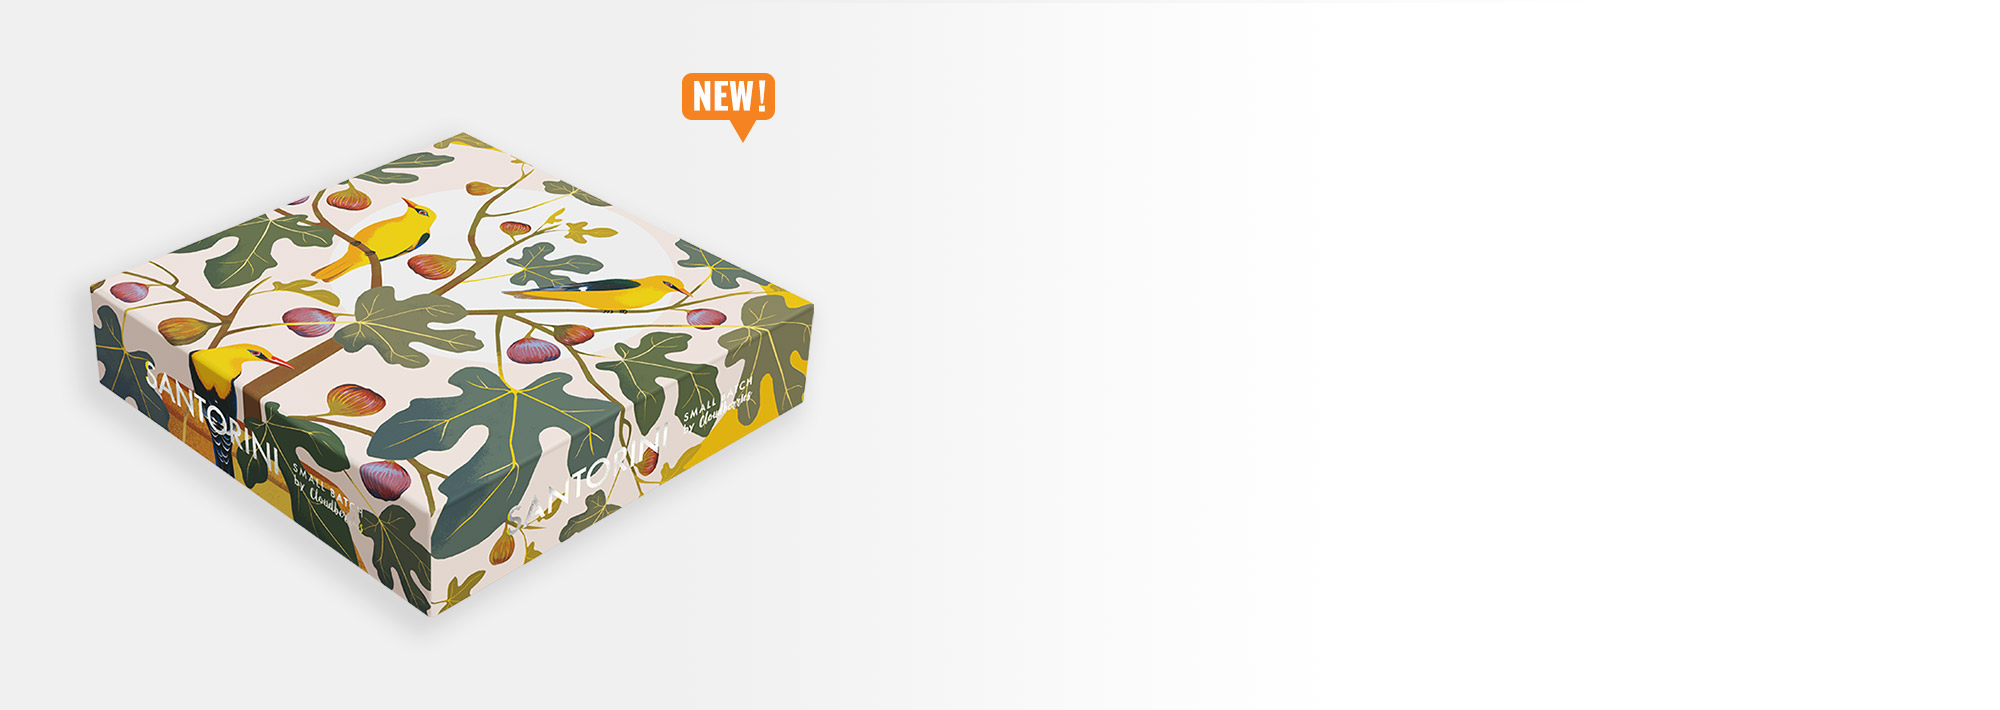 BUY 2 GET 1 free Blox Game Peripheral Fruit Leopard Print Box